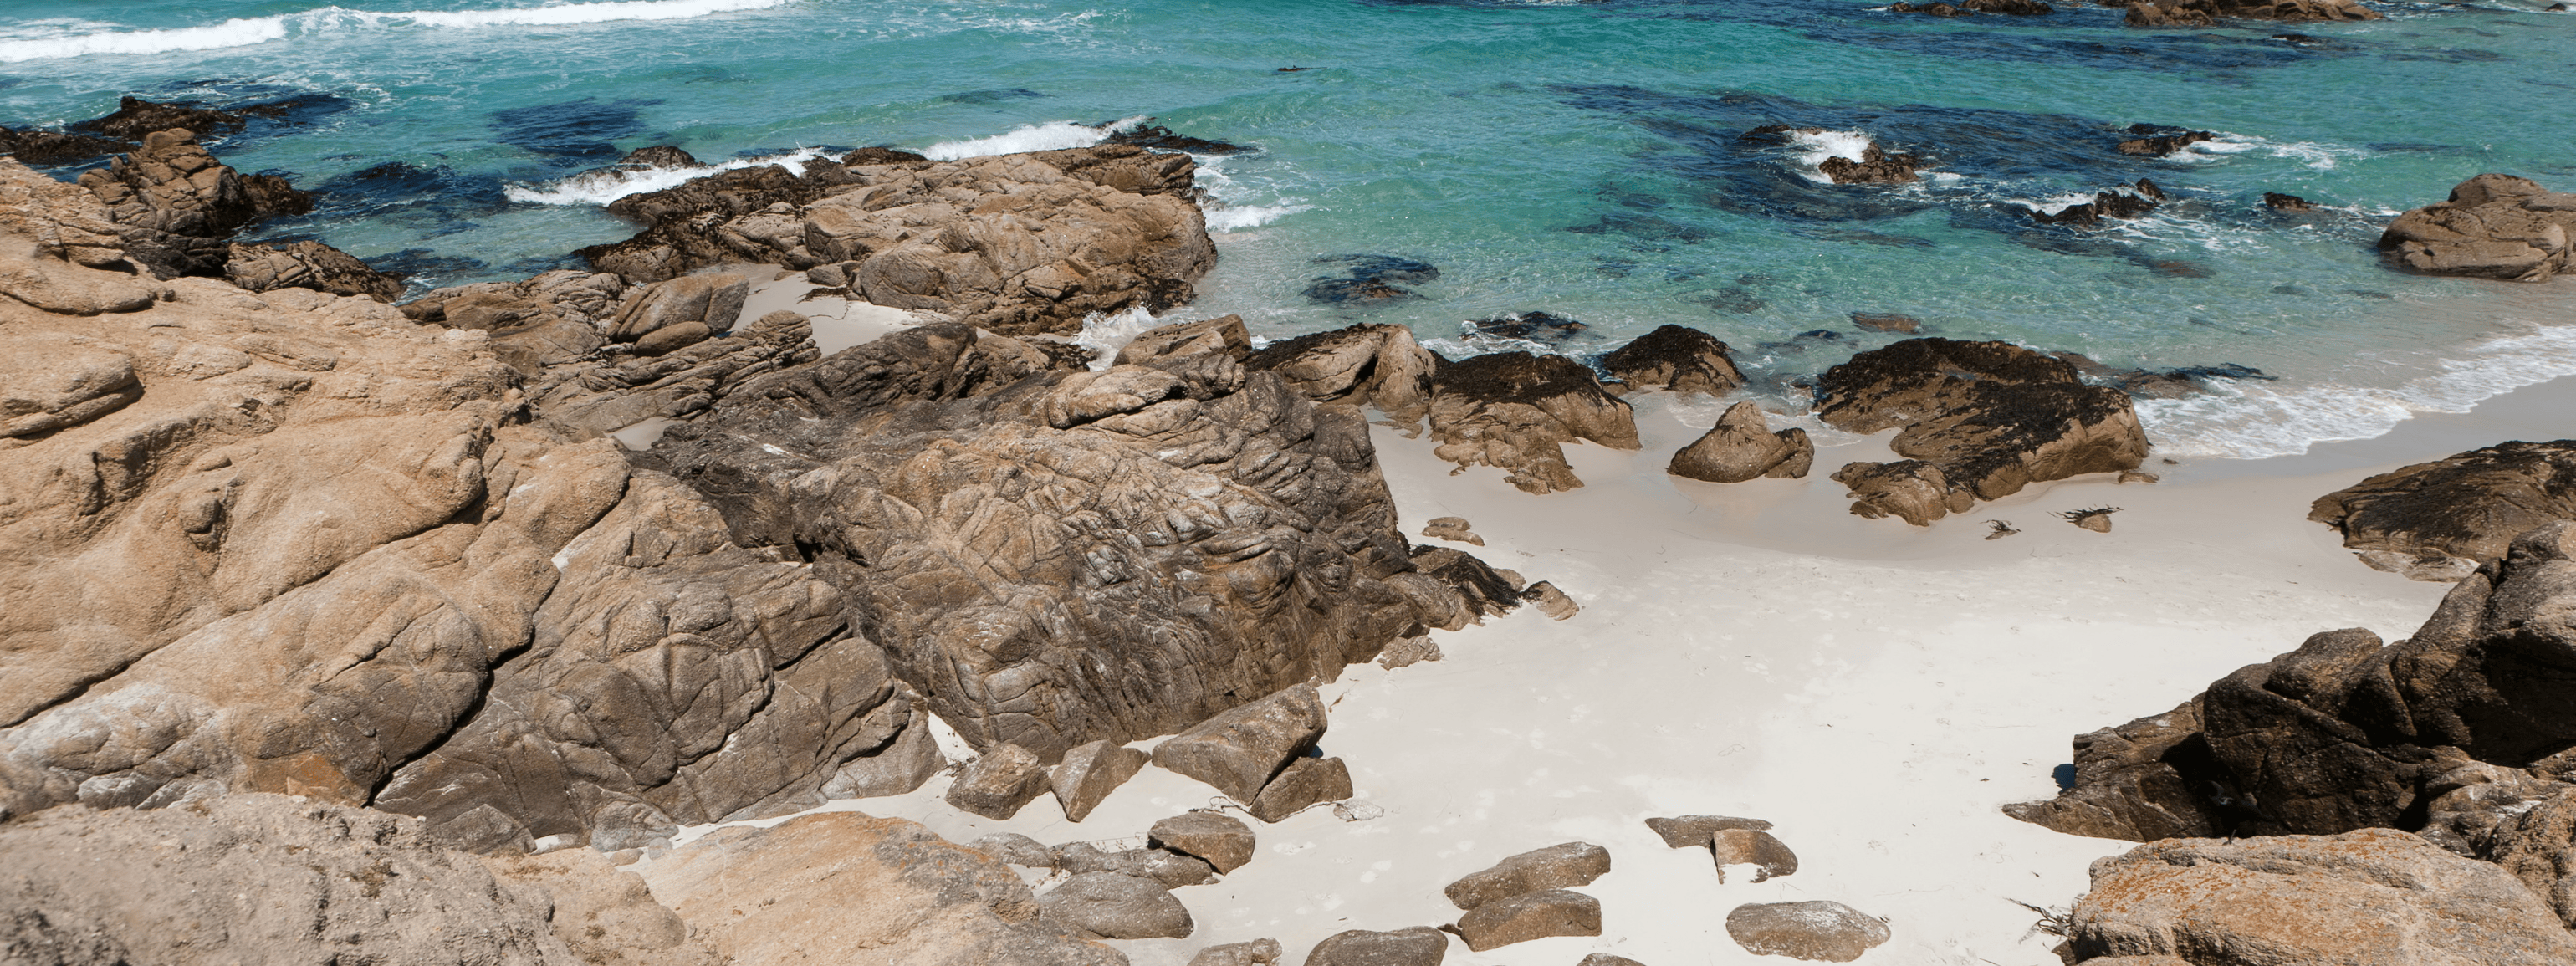 A Comprehensive Monterey Beach Guide